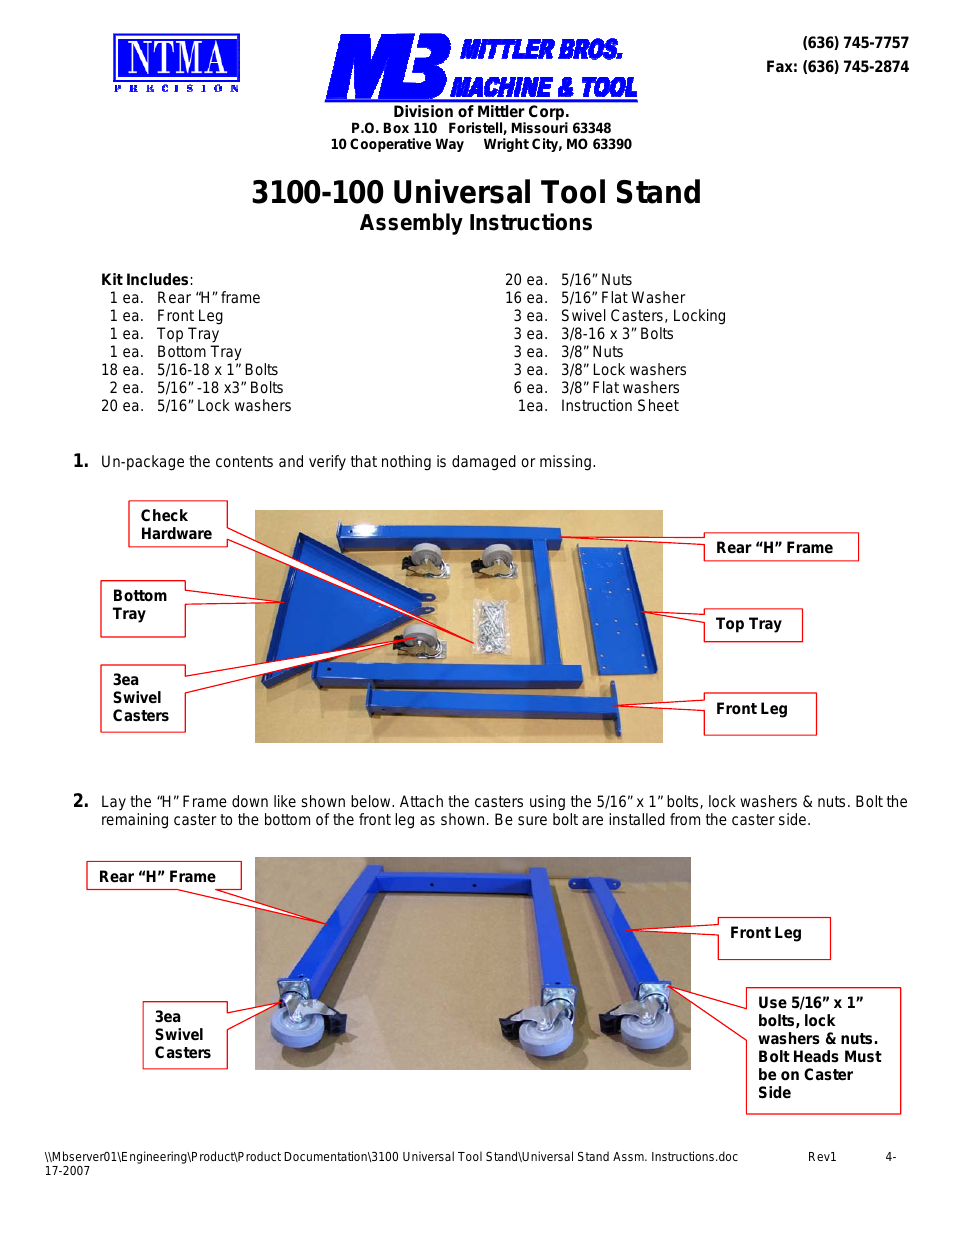 3100-100 Universal Tool Stand